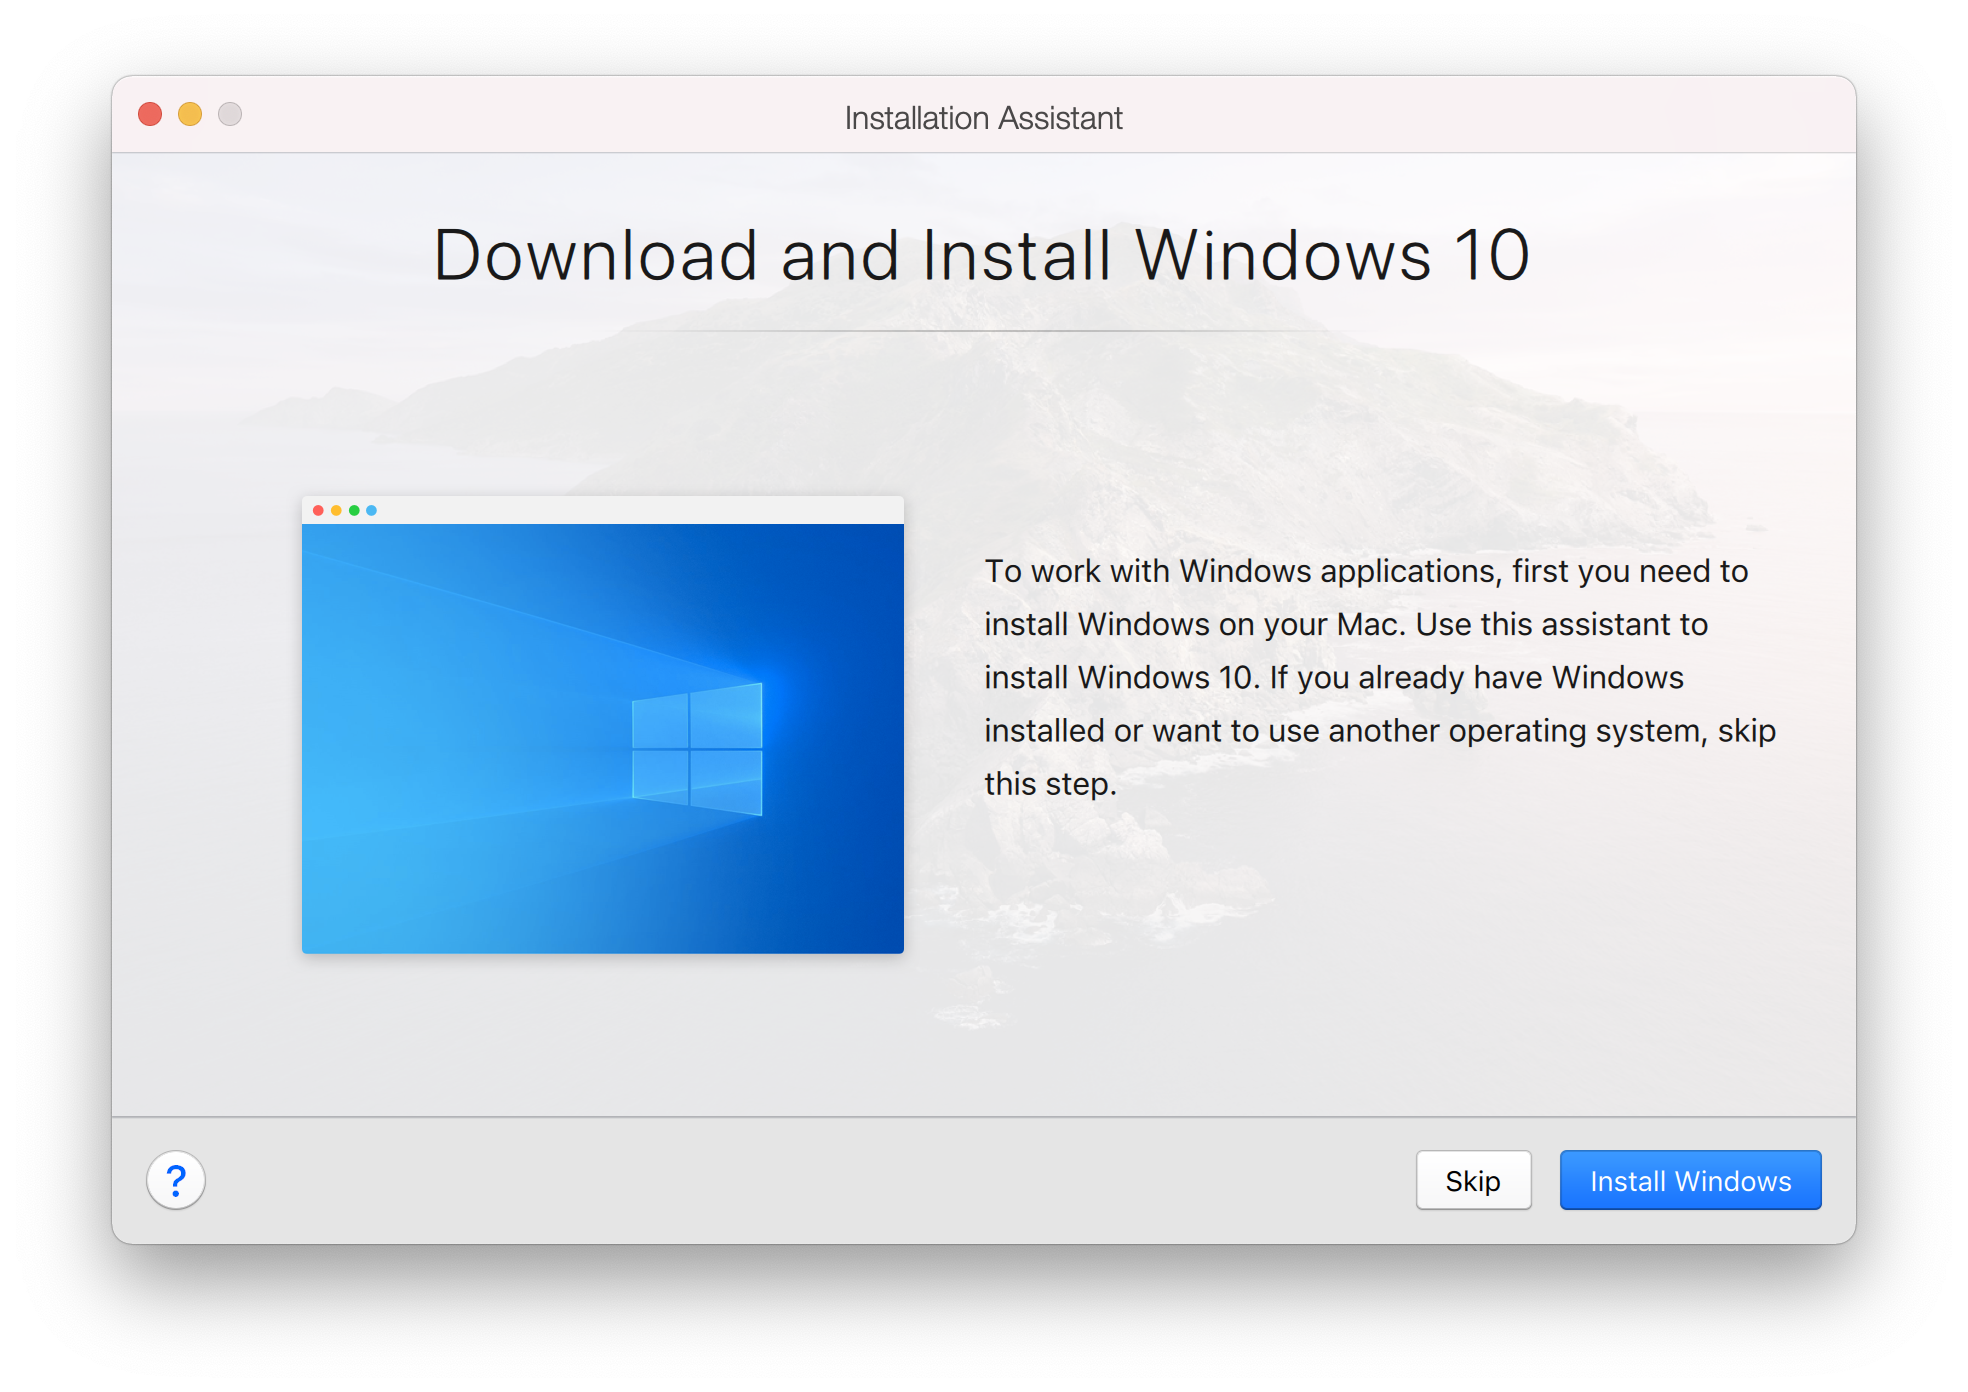 download the new version for windows Parallels Desktop 19